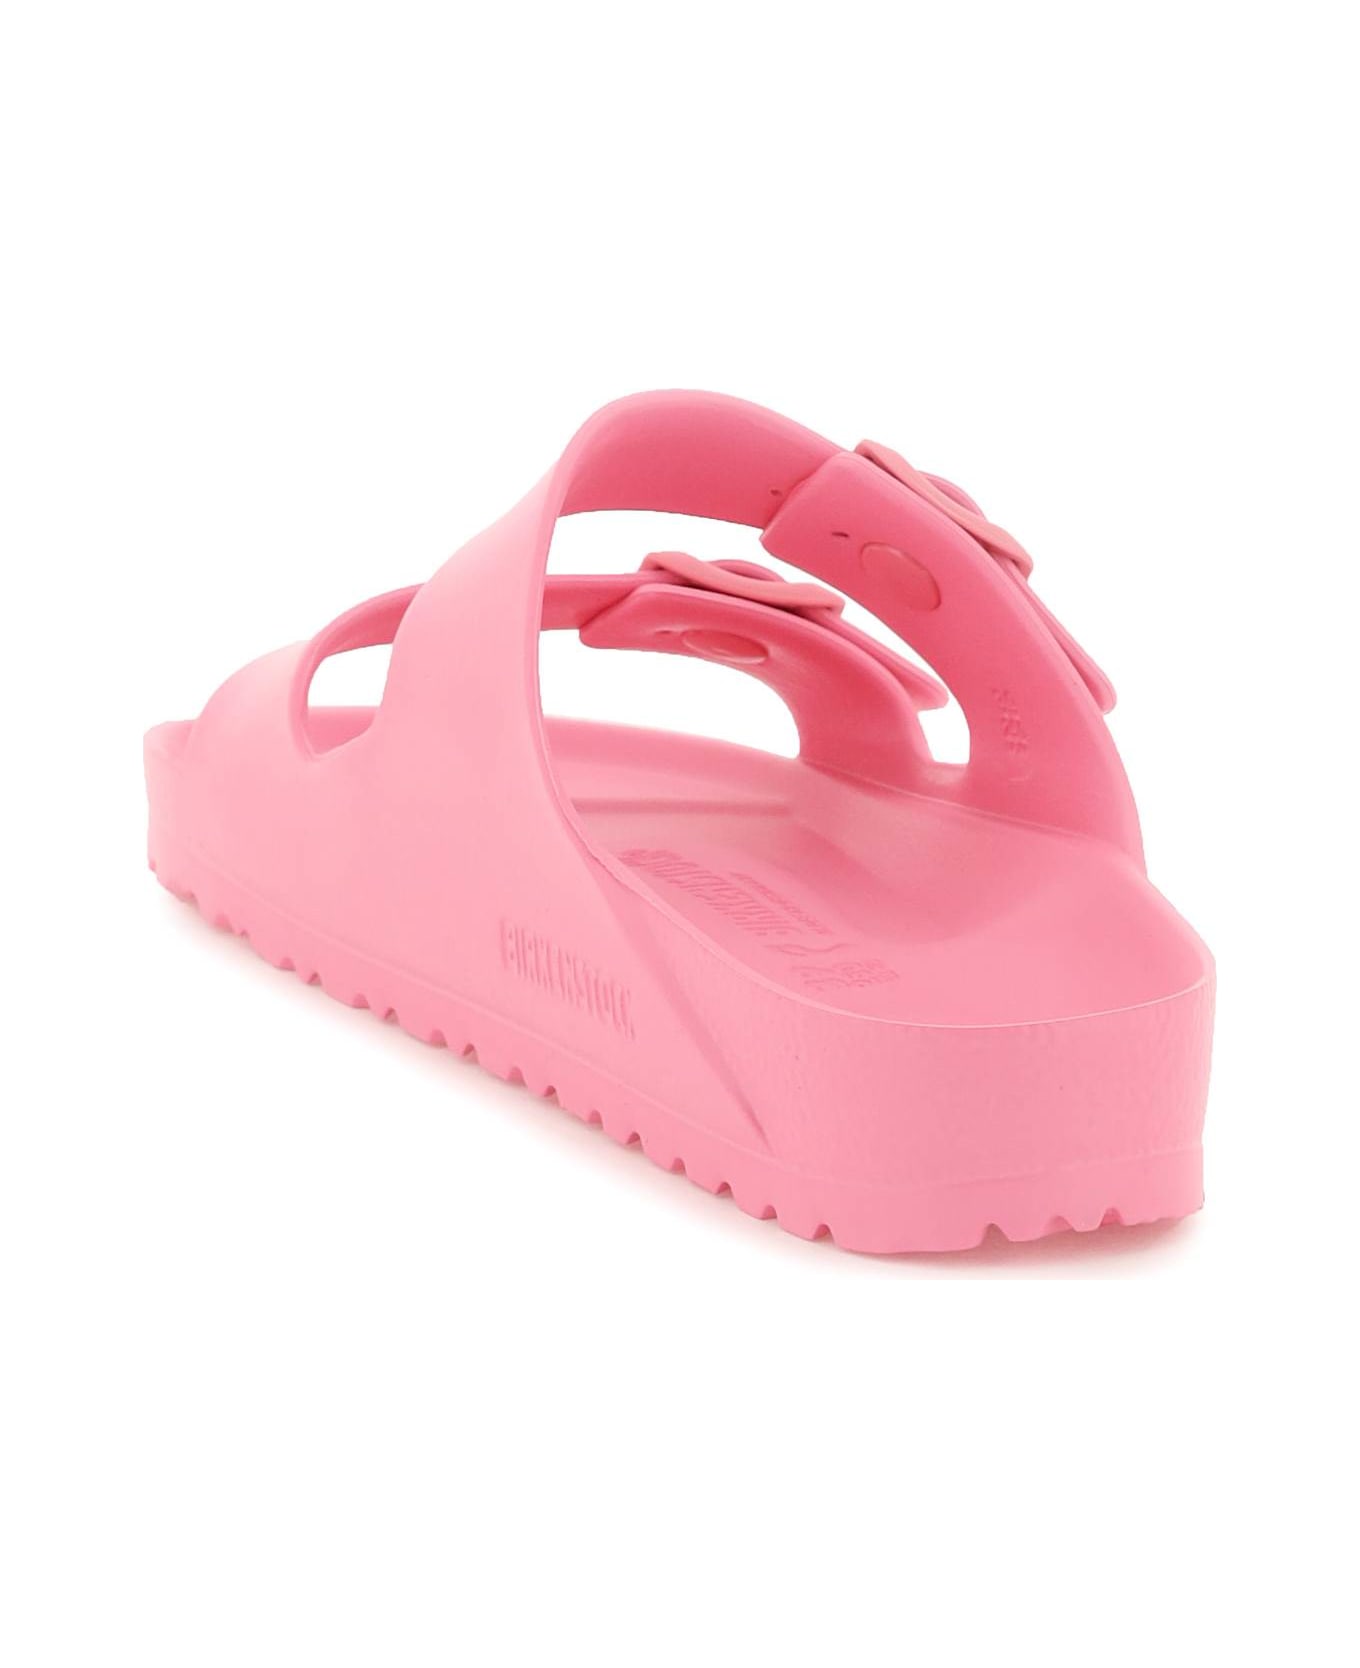 Birkenstock Arizona Essentials Sandals - CANDY PINK (Pink) サンダル